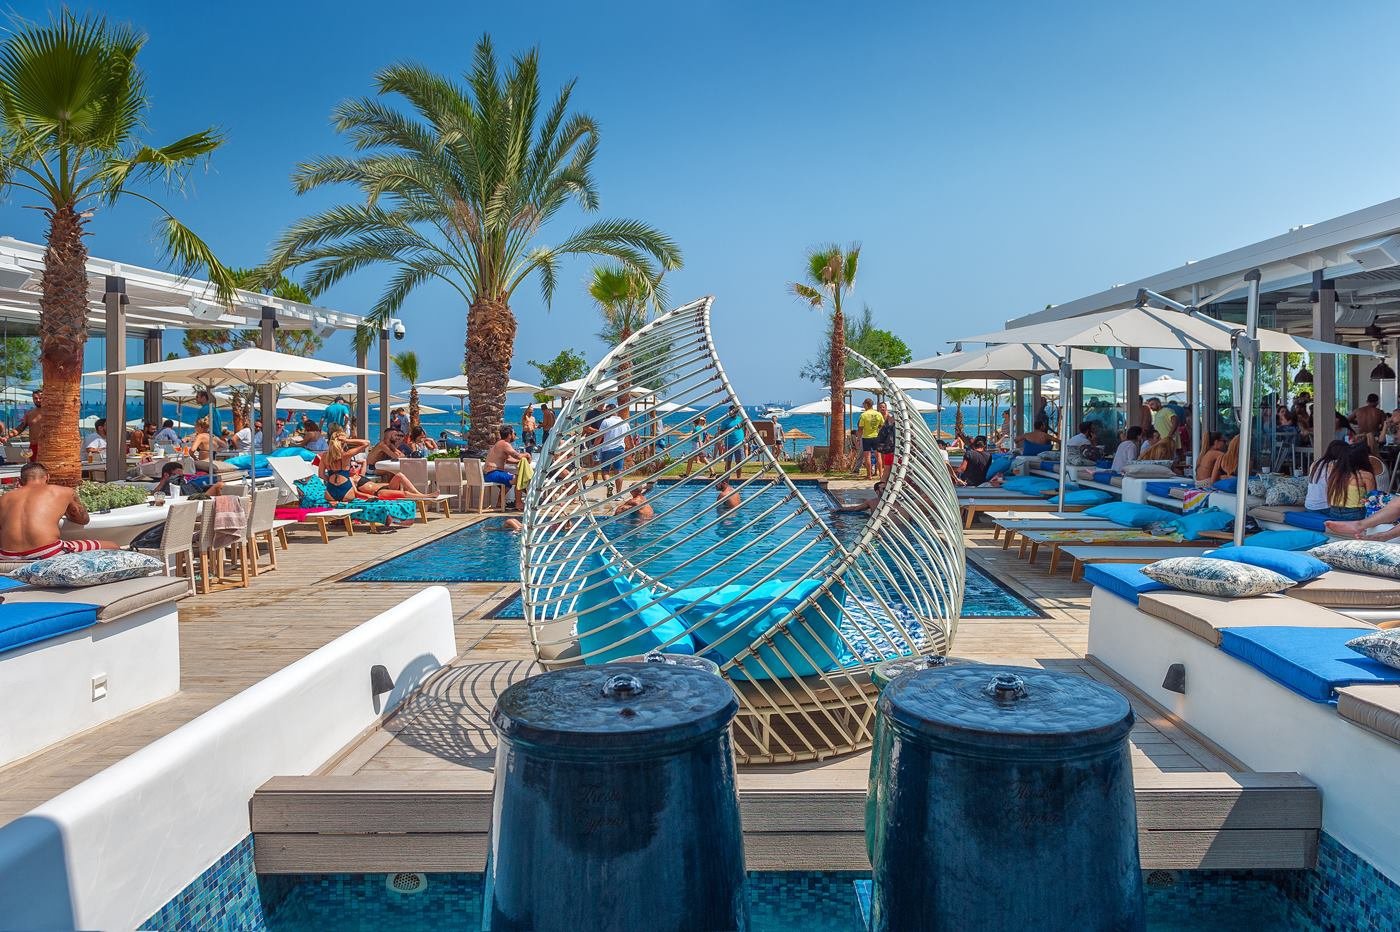 Top 5 Beach Bars in Cyprus